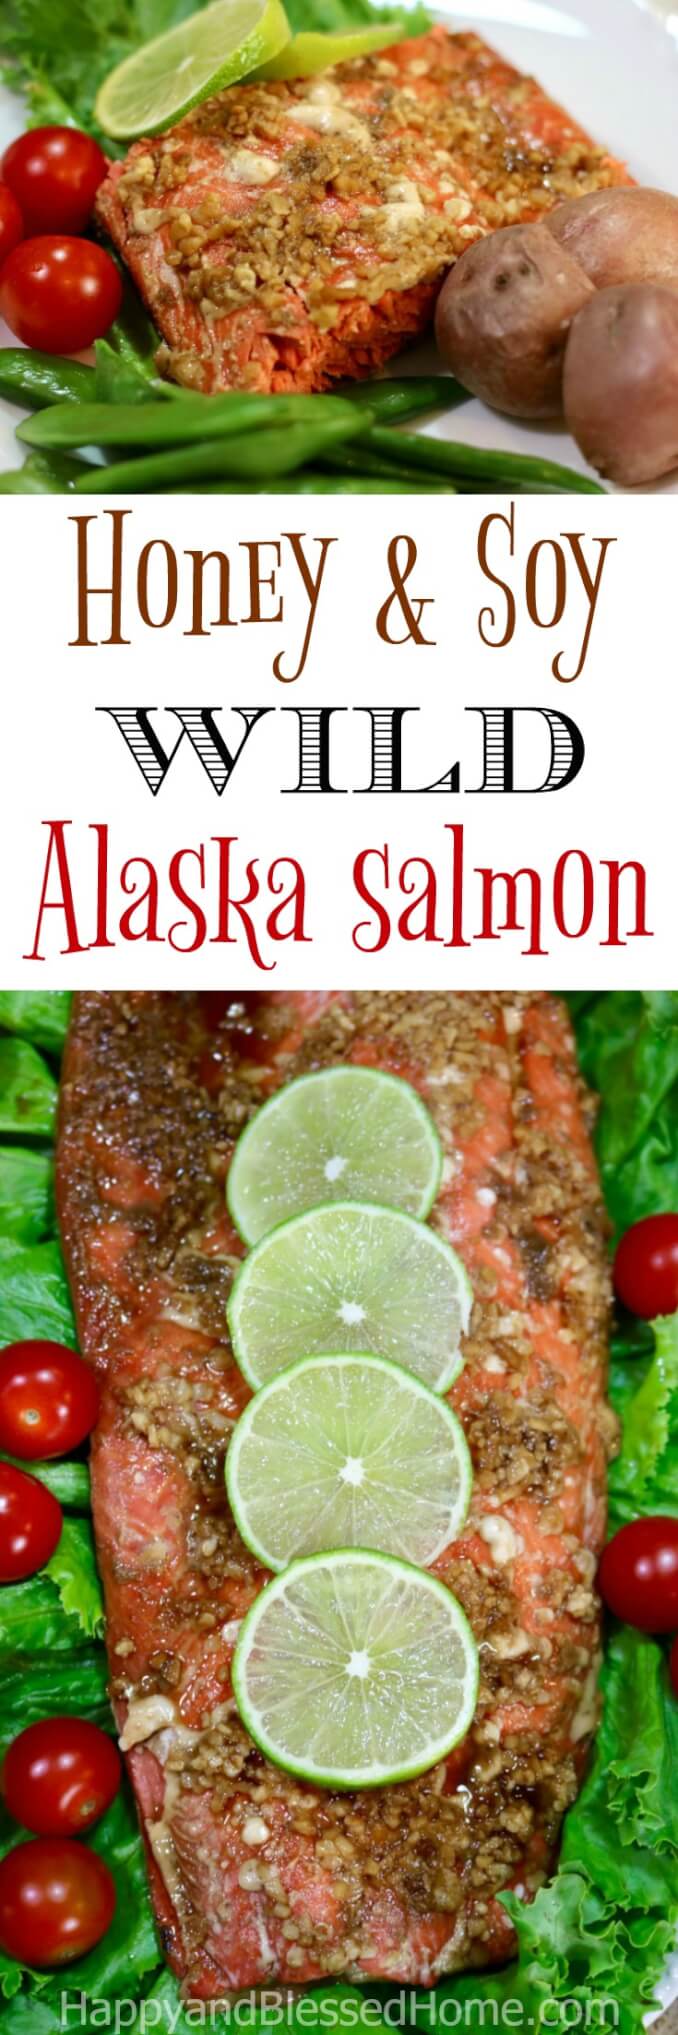 Easy Recipe for Honey and Soy wild Alaska salmon